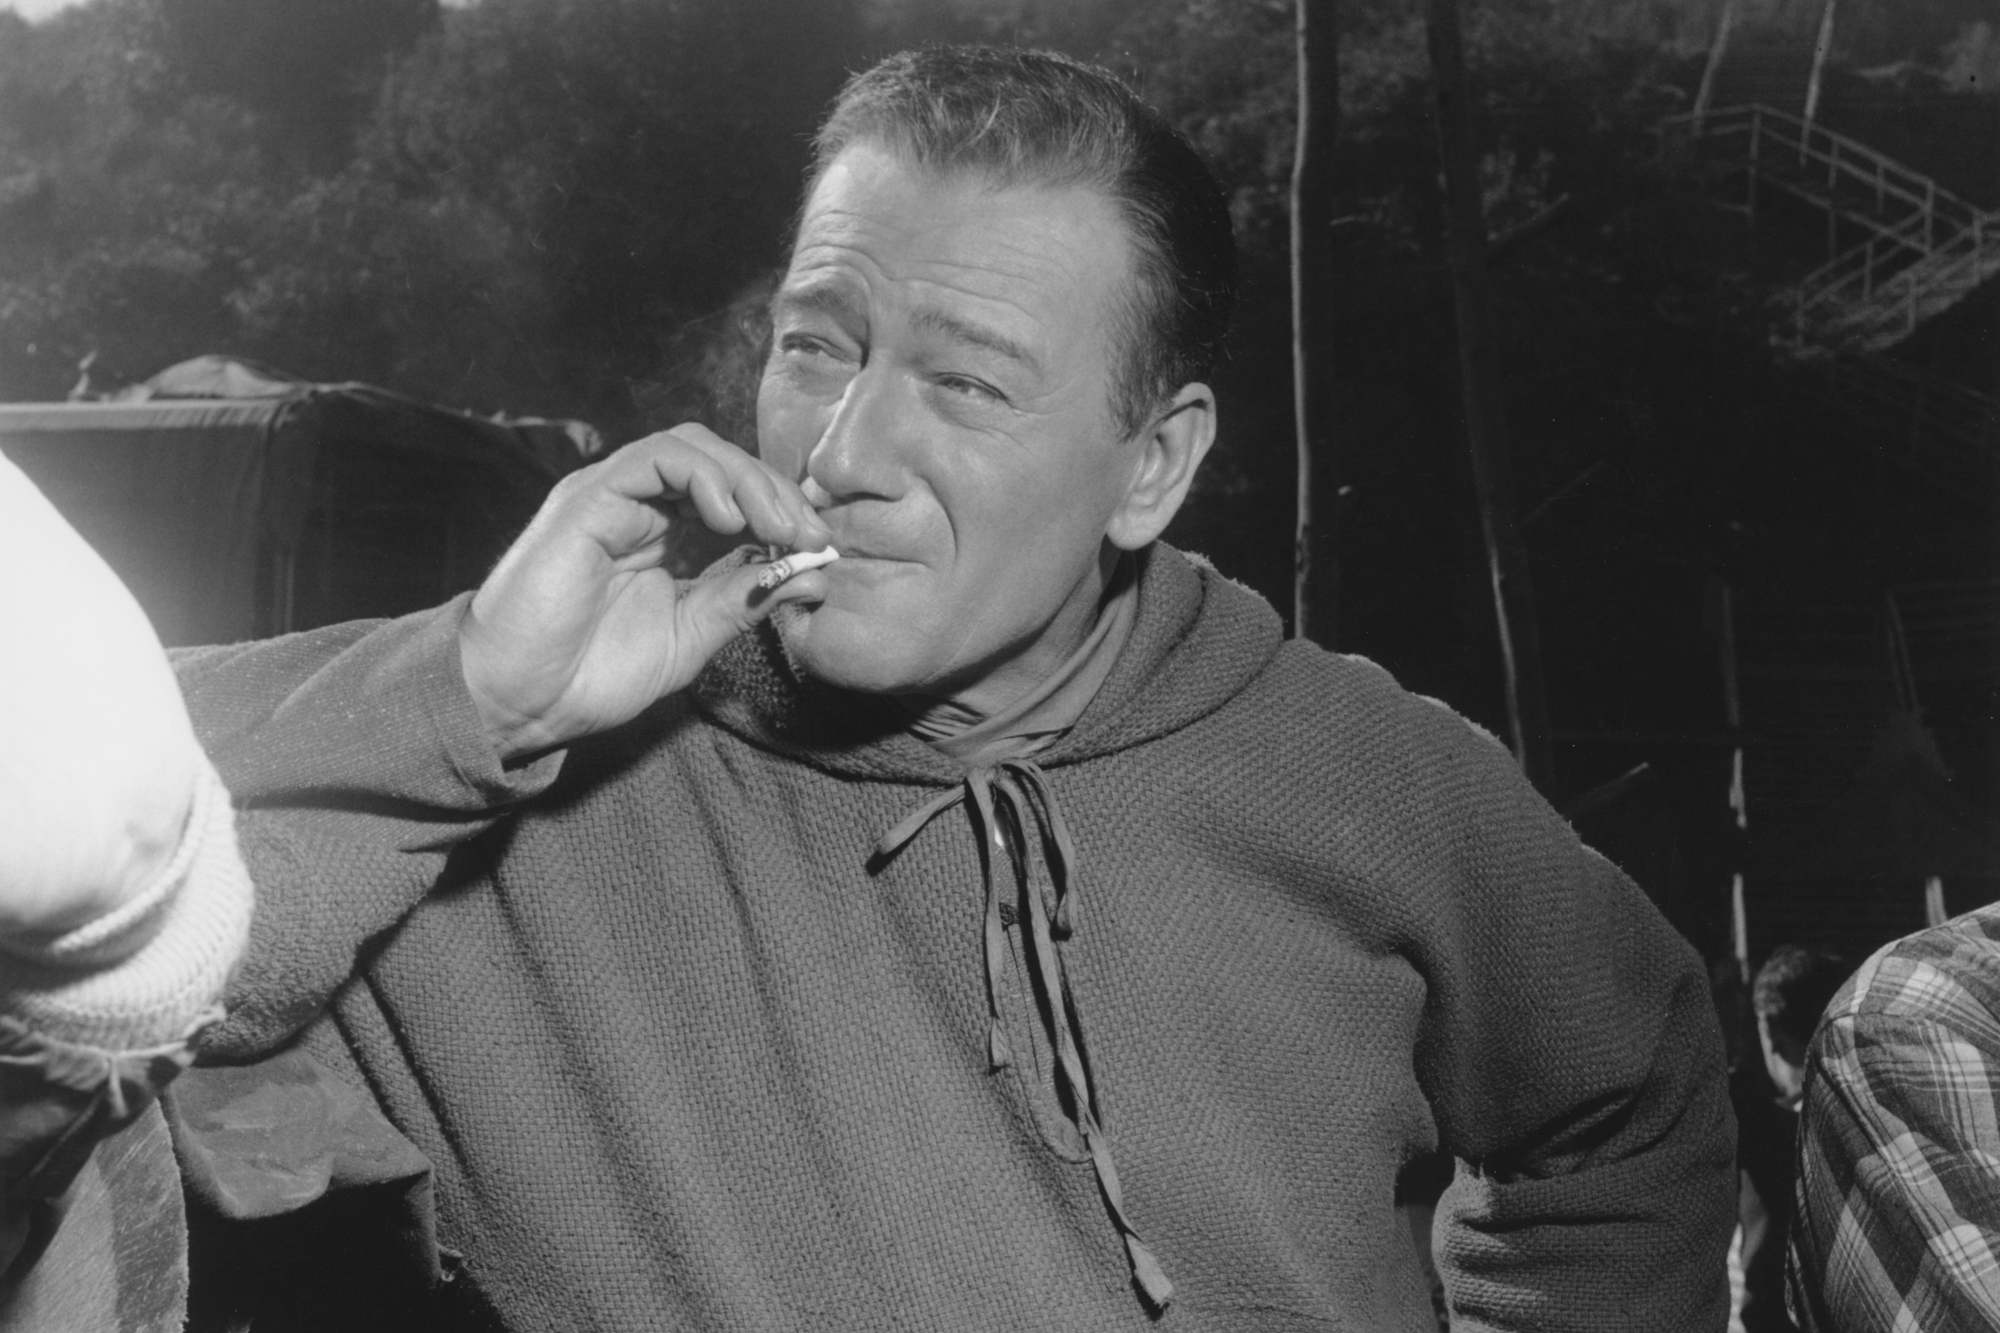 John Wayne, who wasn't a fan of weed. He's smoking a cigarette, while wearing a costume.